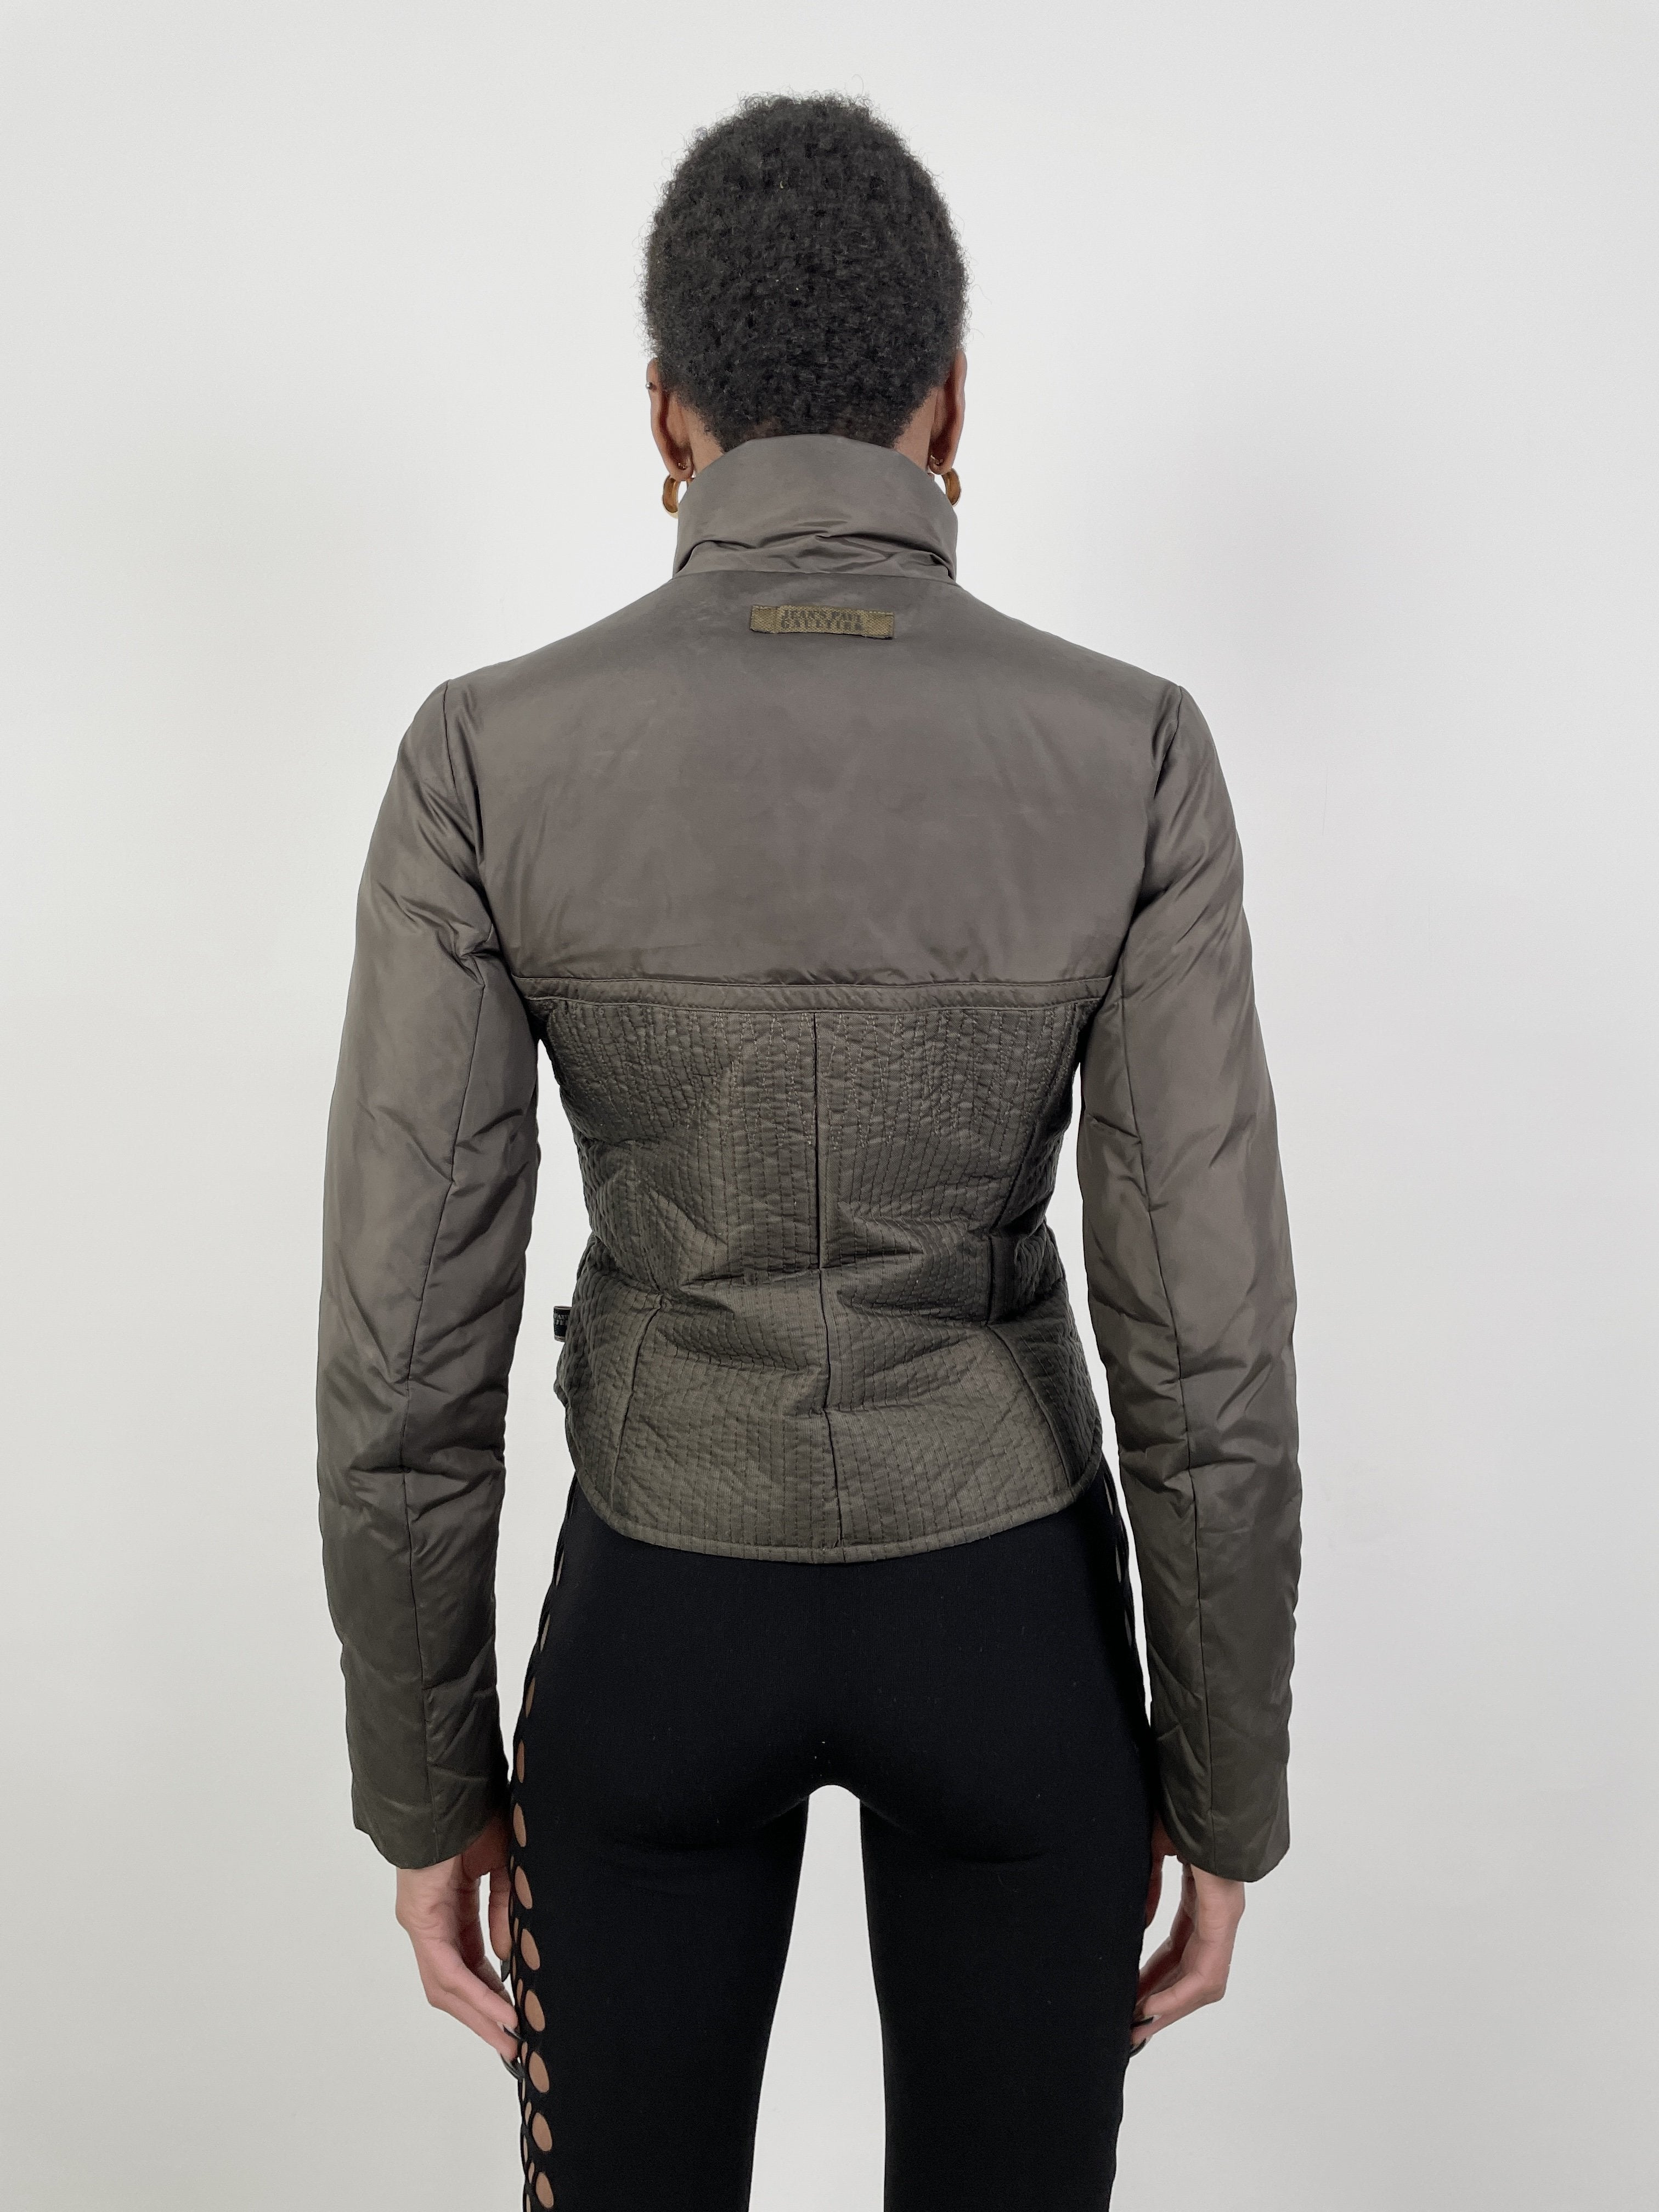 Jean's Paul Gaultier Corset-Style Jacket - Faulkner